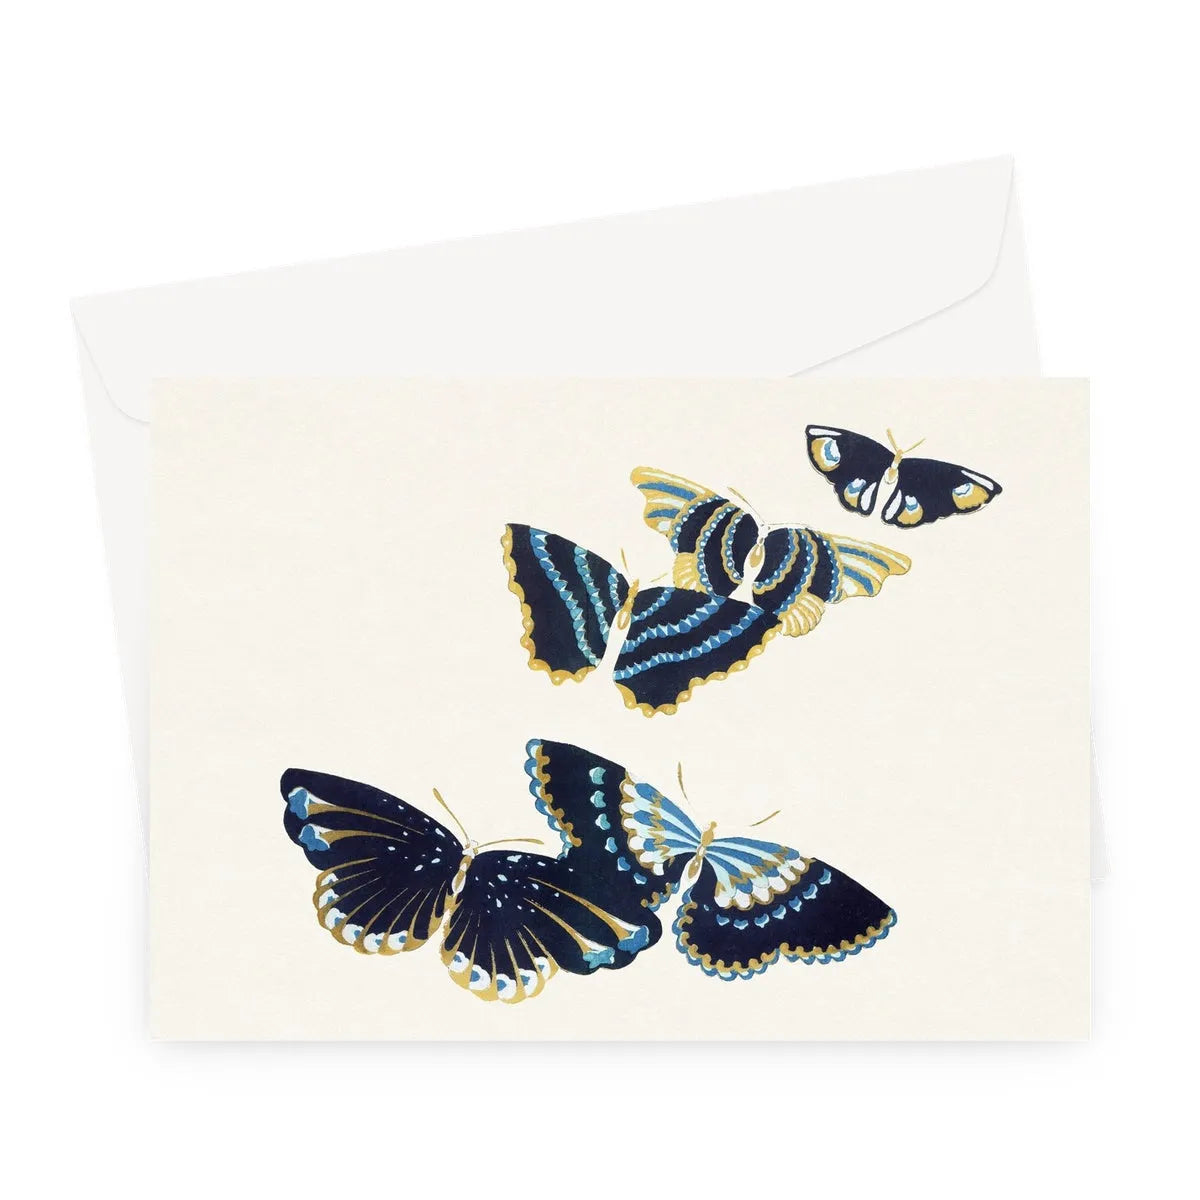 Japanese Blue Butterflies Too - Kamisaka Sekka Greeting Card - A5 Landscape / 1 Card - Greeting & Note Cards